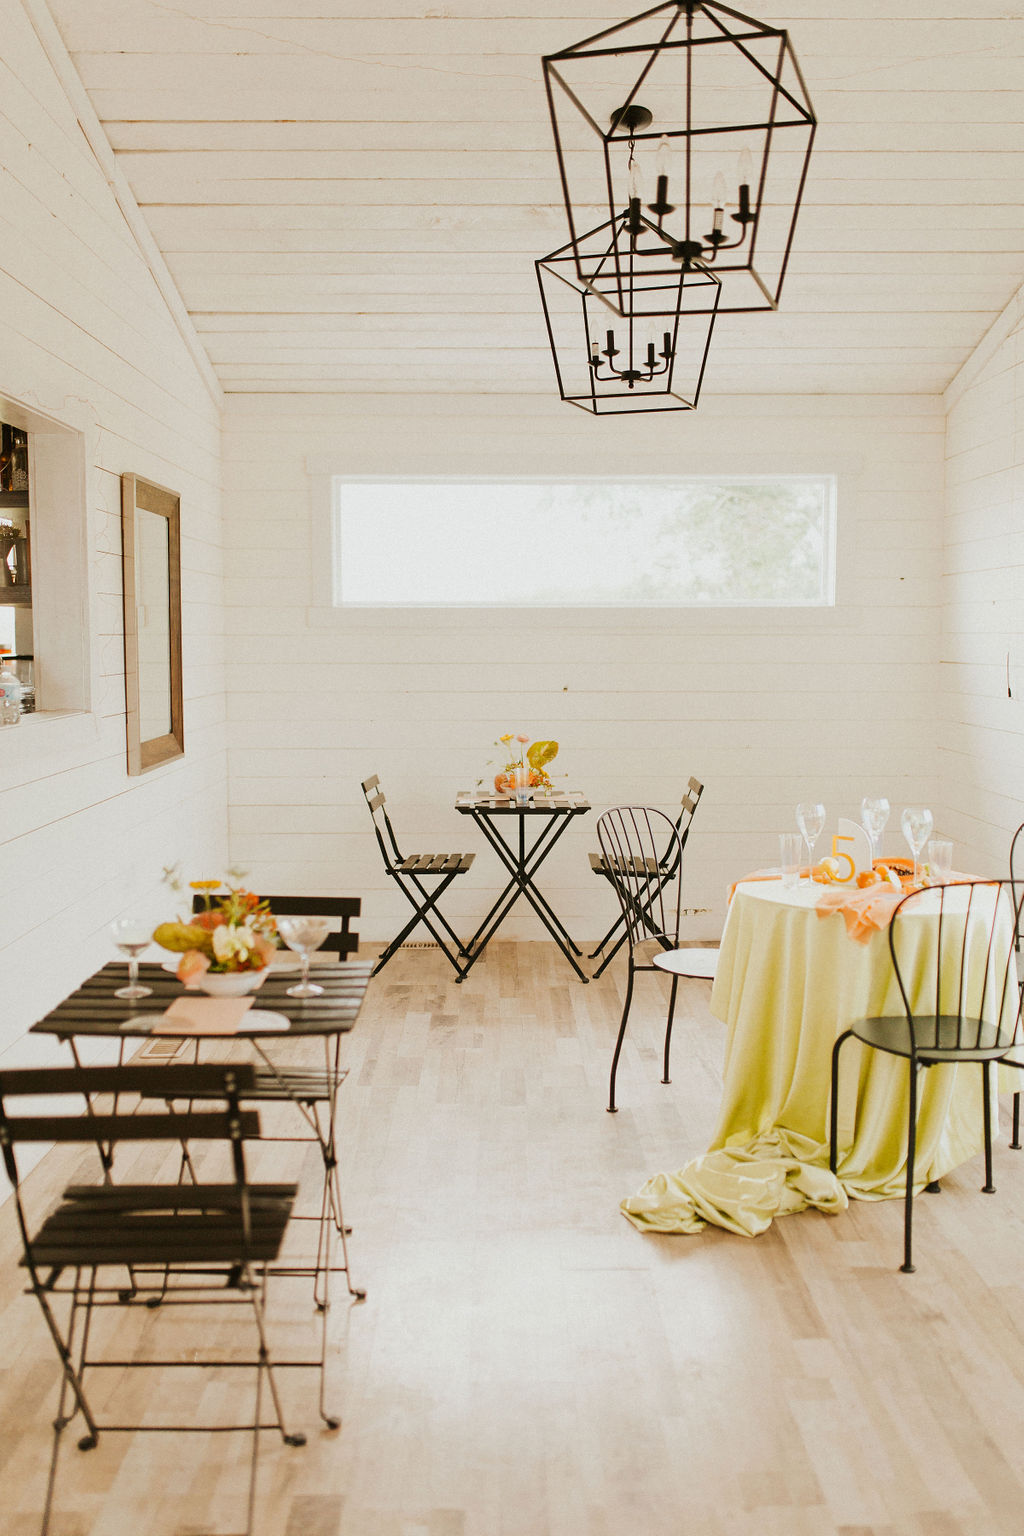 Farmhouse inspired wedding decor for your tangerine wedding inspiration